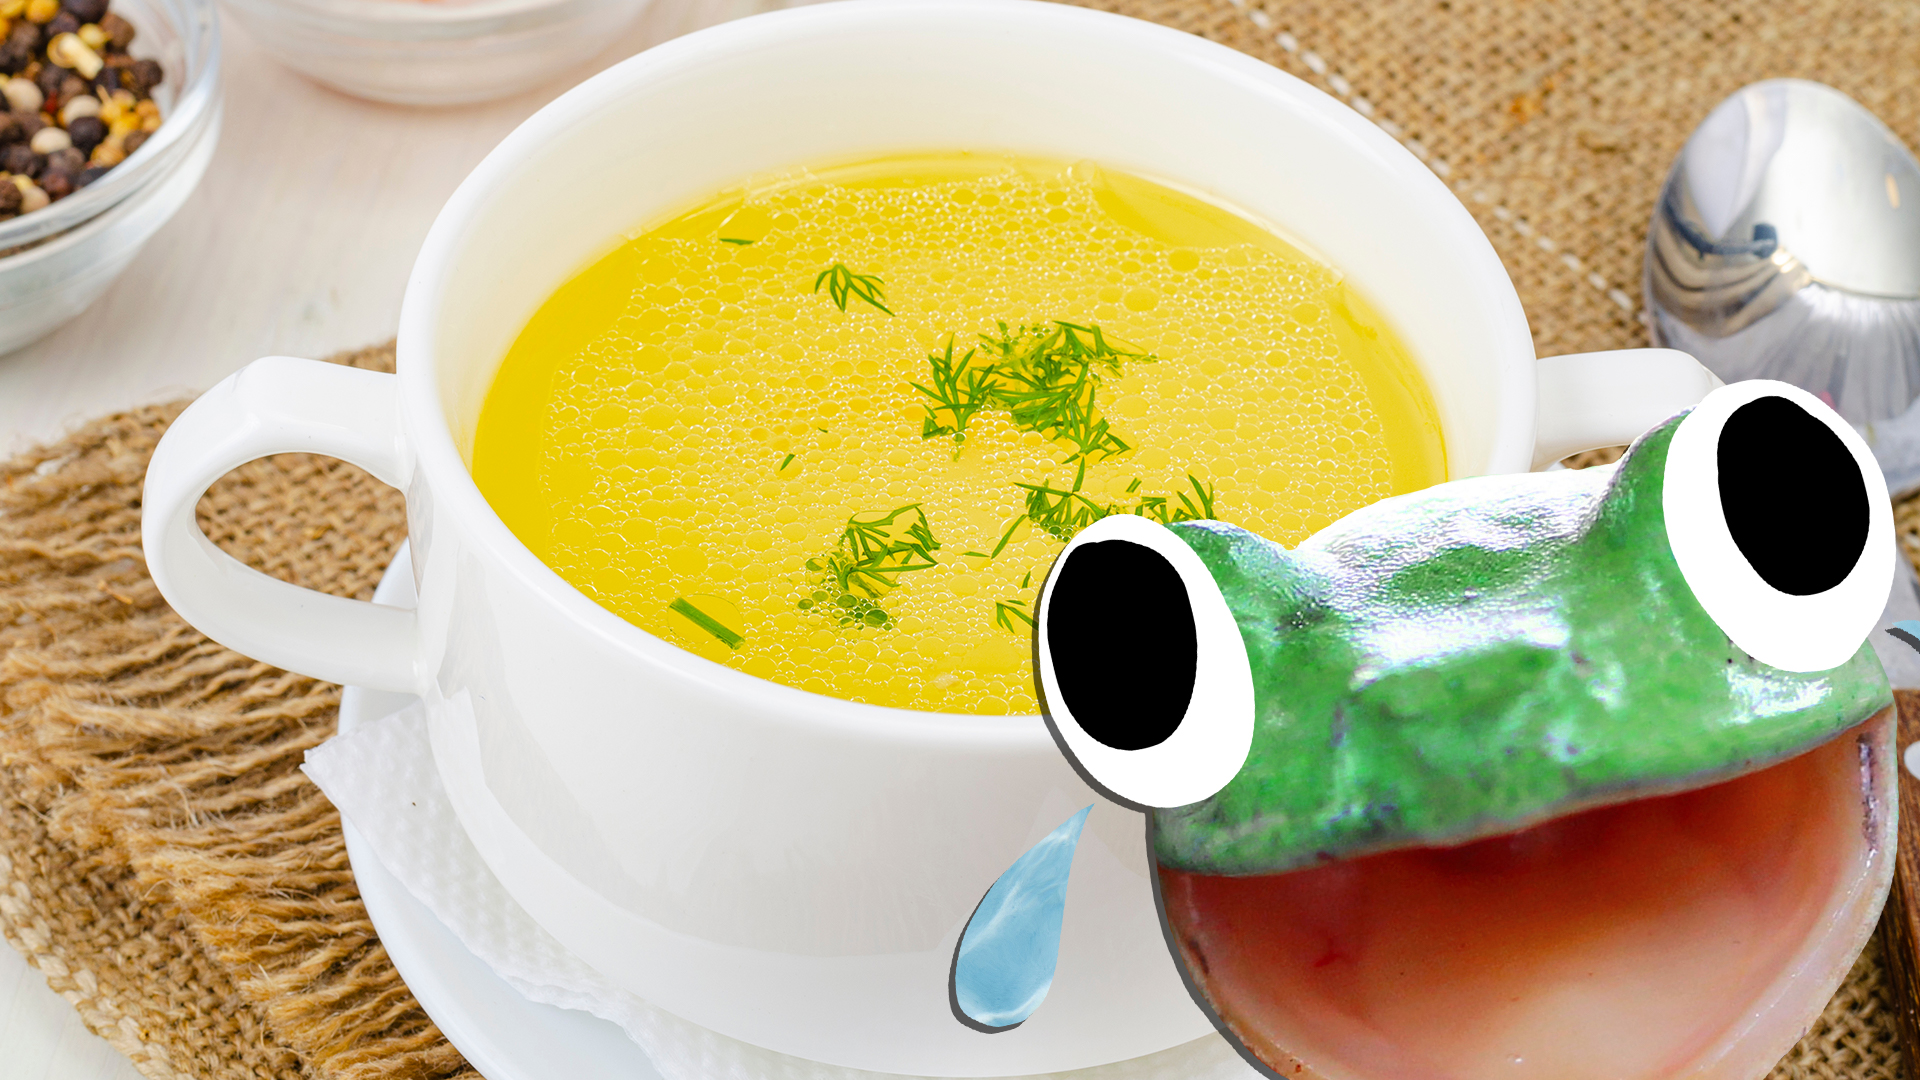 A tasty bowl of soup